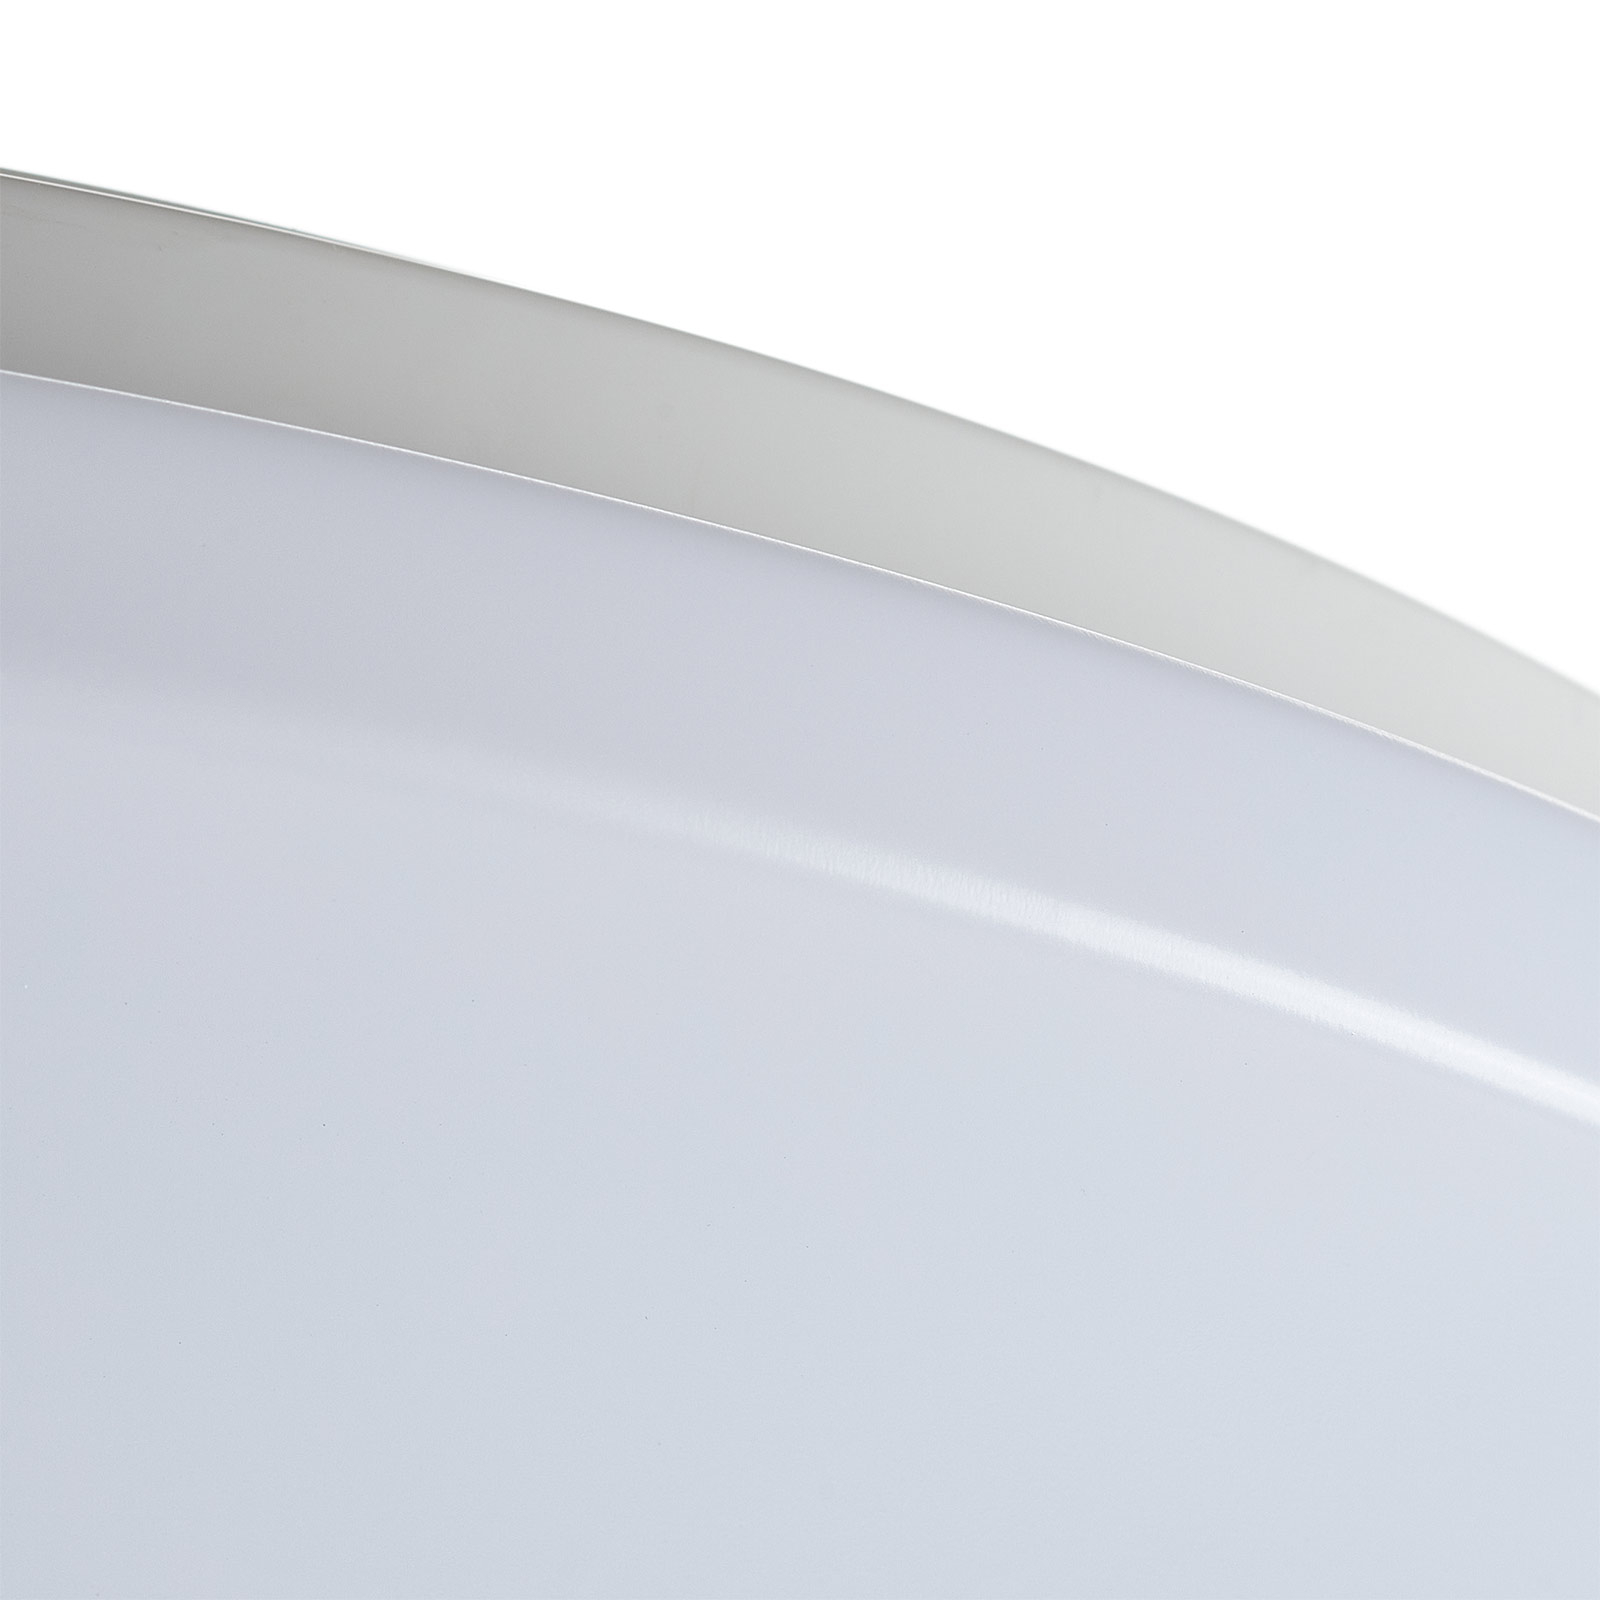 LED plafondlamp Pollux, bewegingsmelder, Ø 27 cm